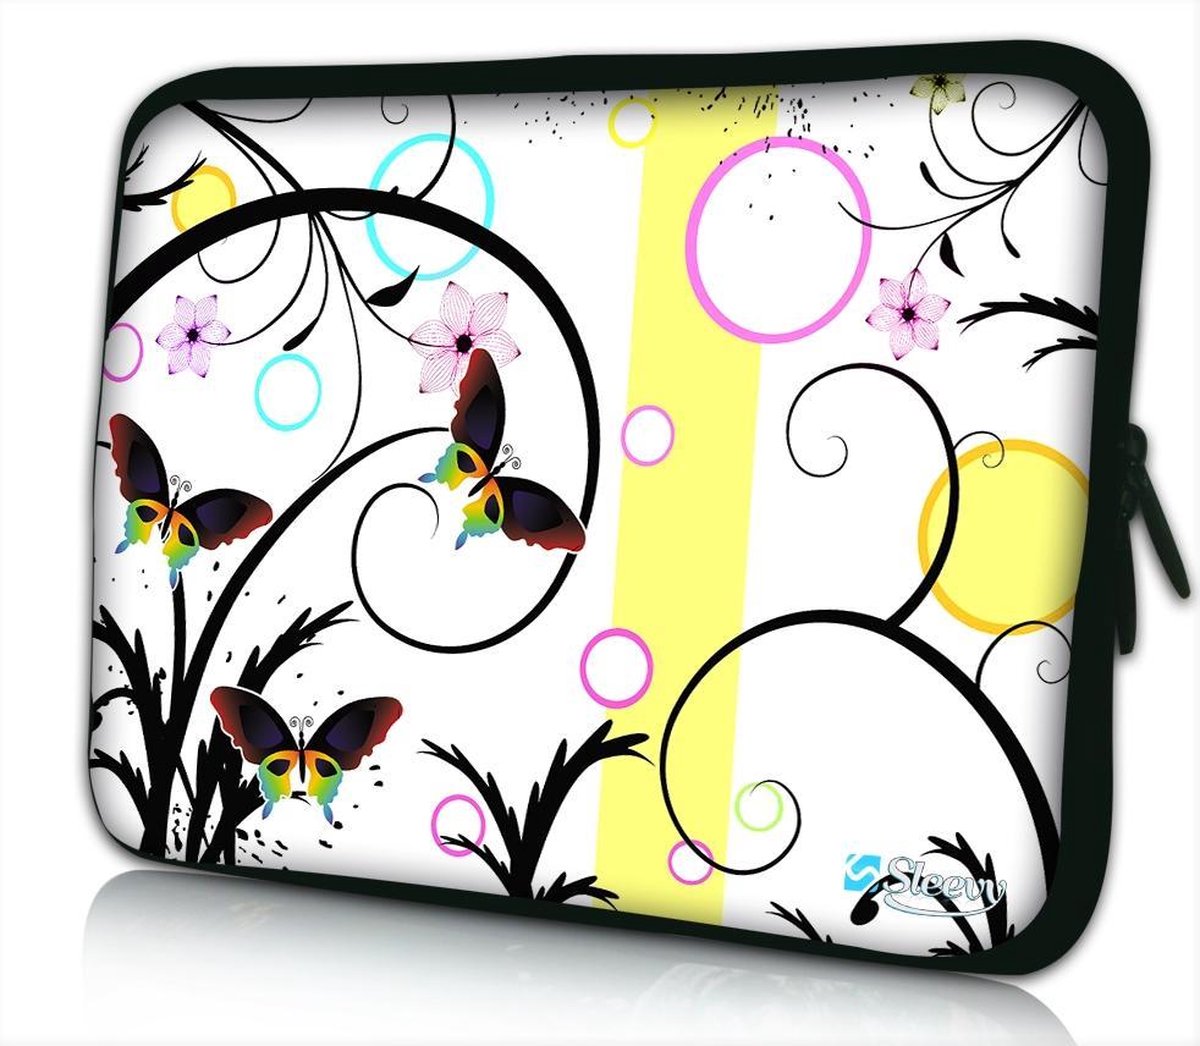 Sleevy 13.3 laptophoes artistiek vlinder design - laptop sleeve - Sleevy collectie 300+ designs